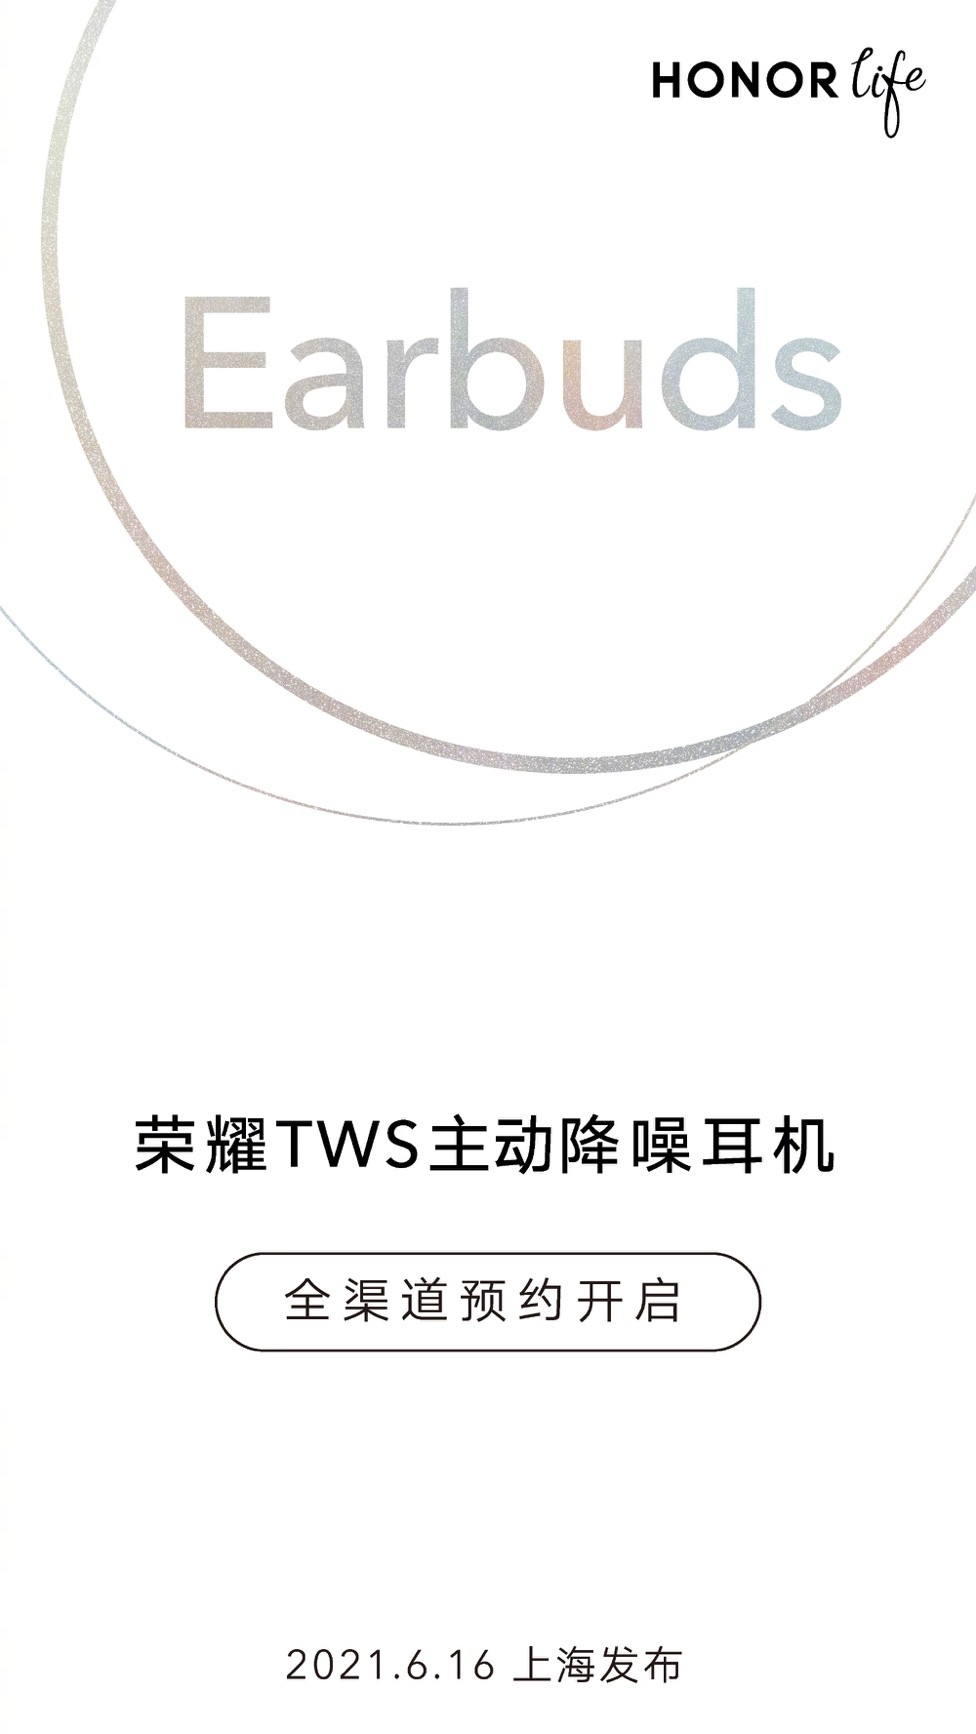 TWS主动降噪还有超长续航，荣耀Earbuds系列新品耳机曝光